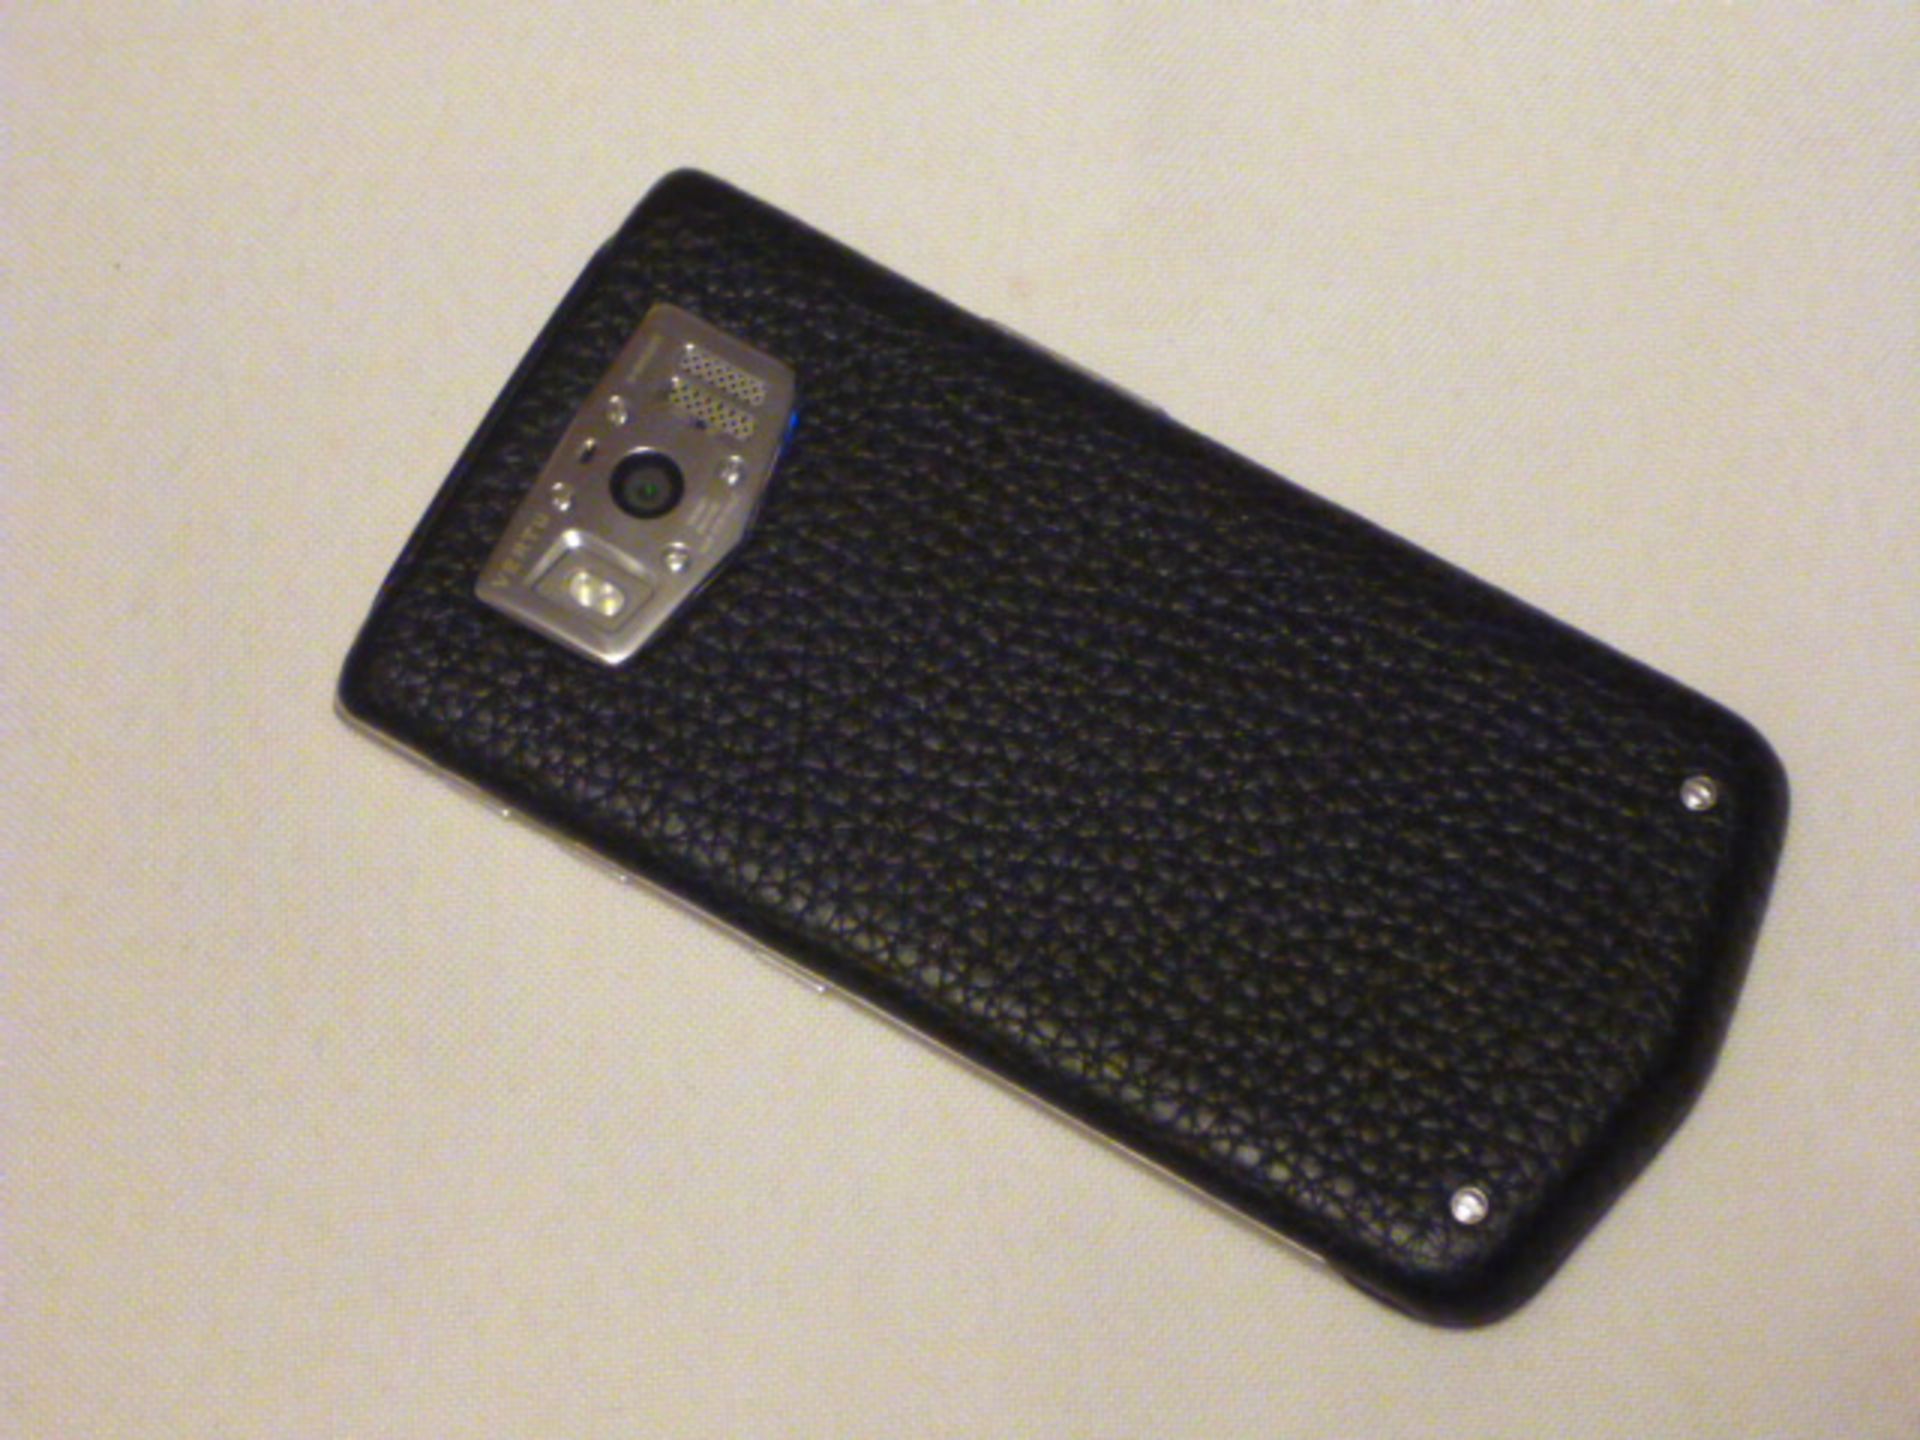 Vertu Constellation Touch Phone, Black Leather. Demonstrator, S/N V-002335 Tested Working, but - Bild 2 aus 2